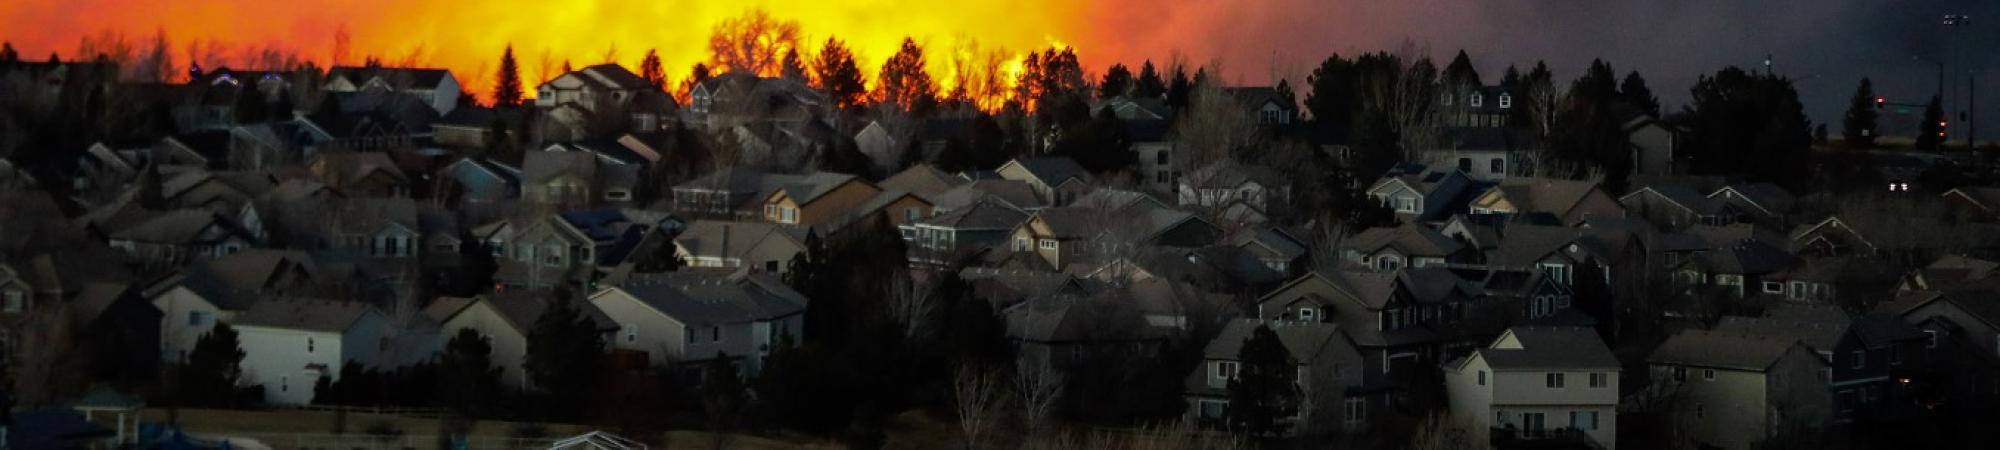 Marshall Fire, Image by Colorado Public Radio